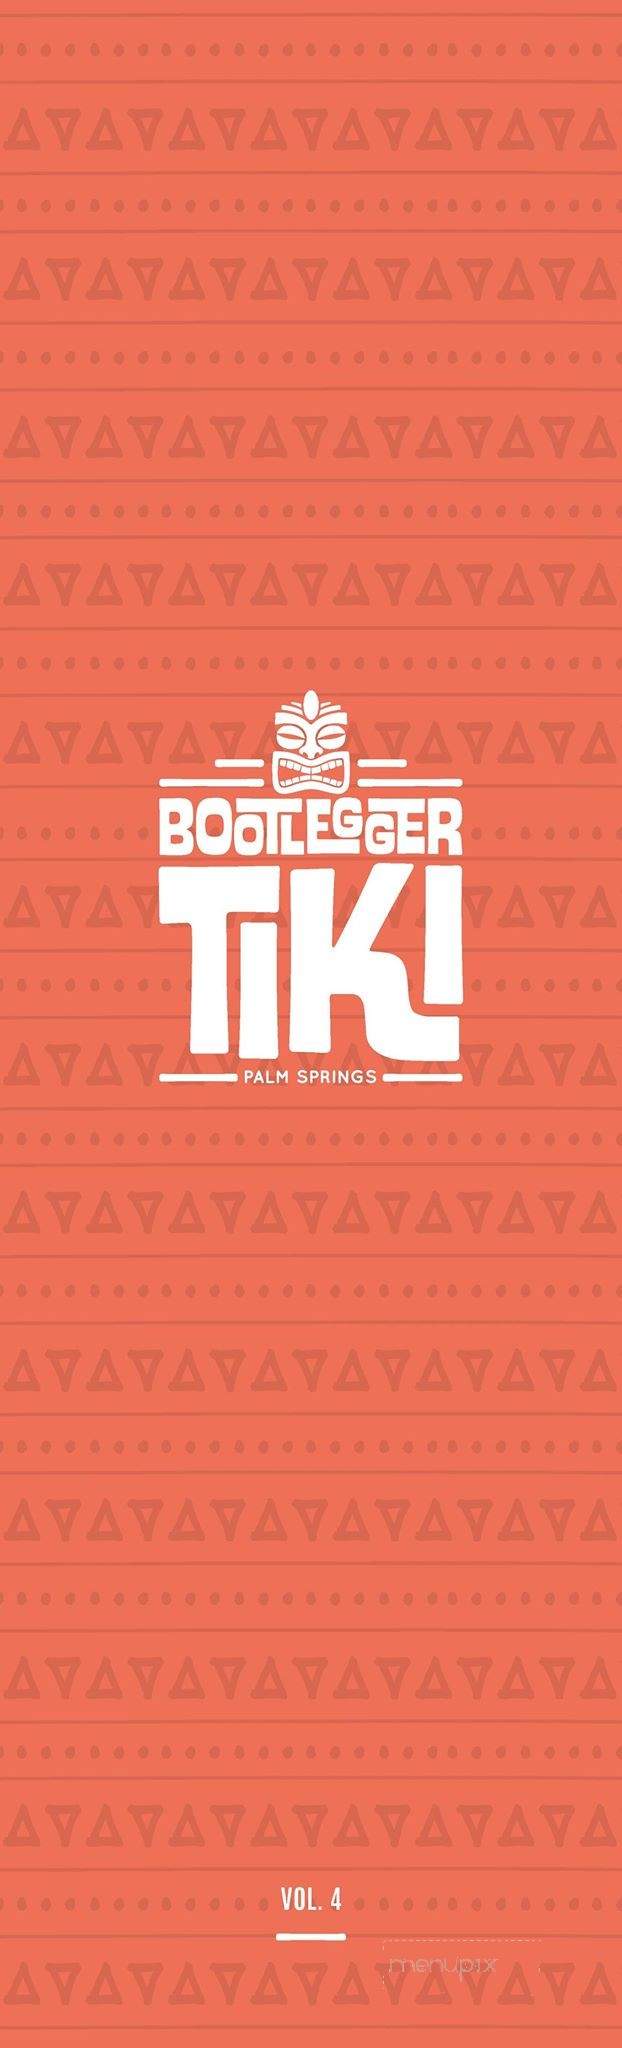 Bootlegger Tiki - Palm Springs, CA